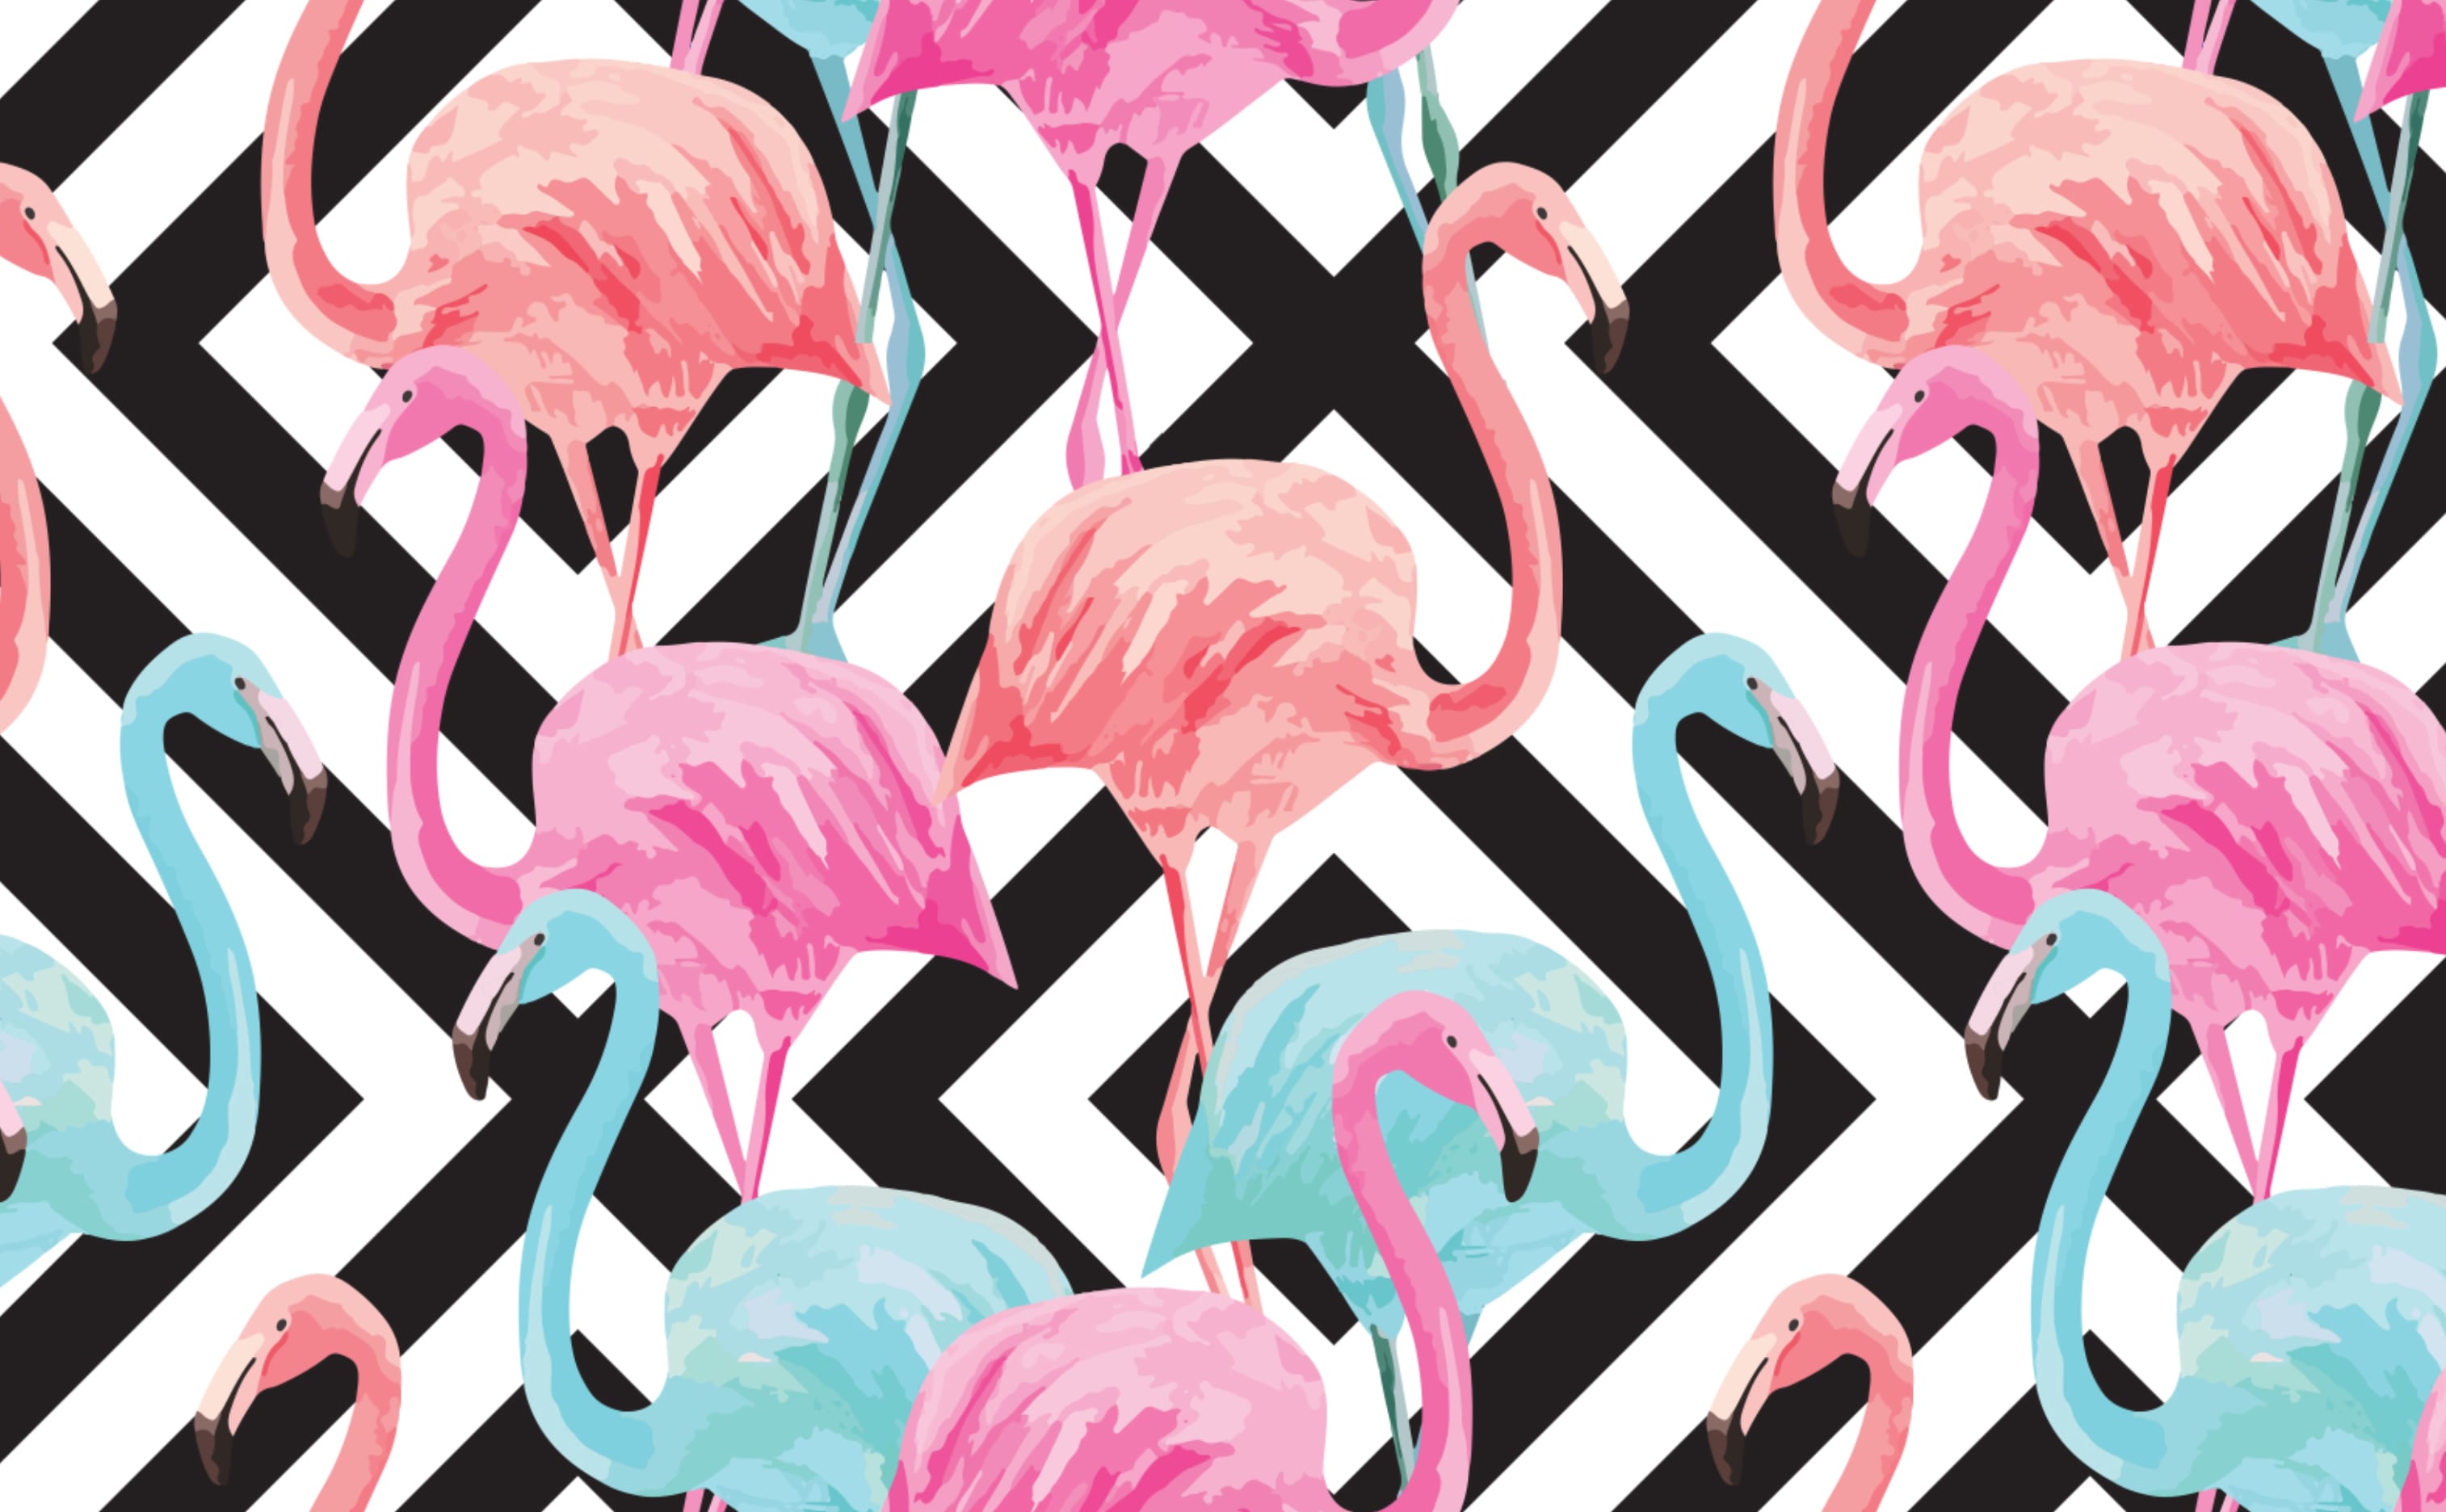 flamingos wallpaper hd